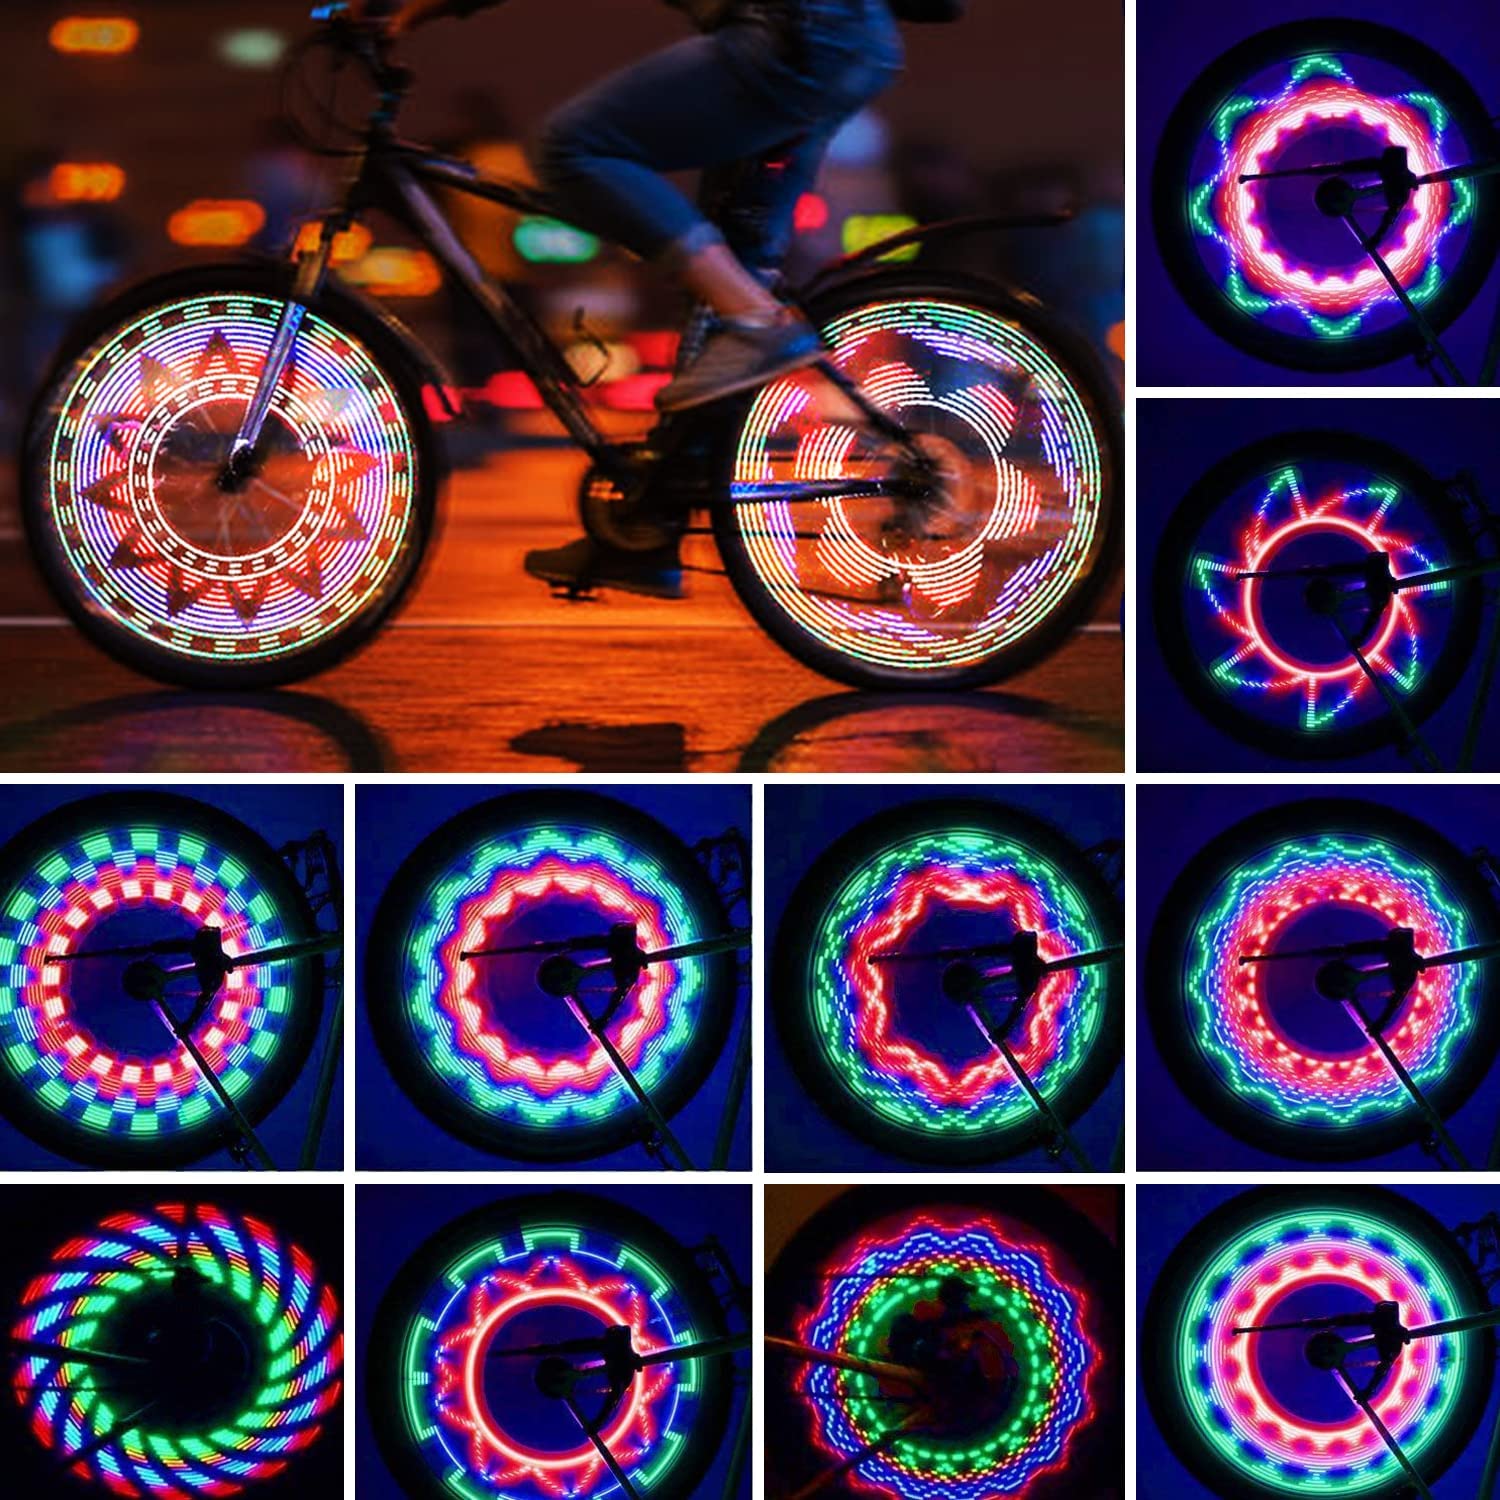 Light Up the Night: 9 Bike Wheel Lights So You Can Shine Bright!